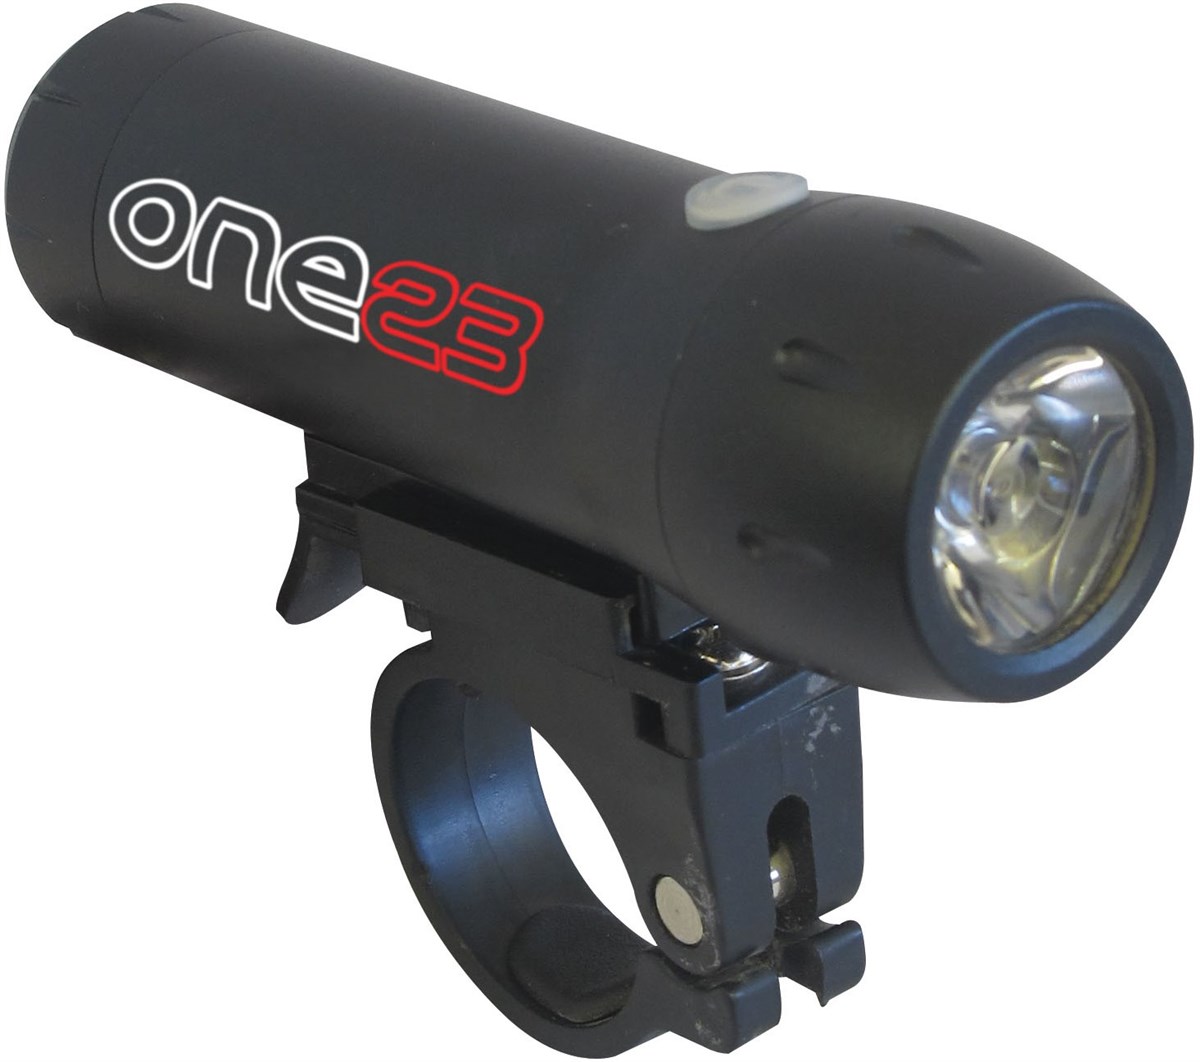 One23 Mega Bright 3 Watt Front Light product image